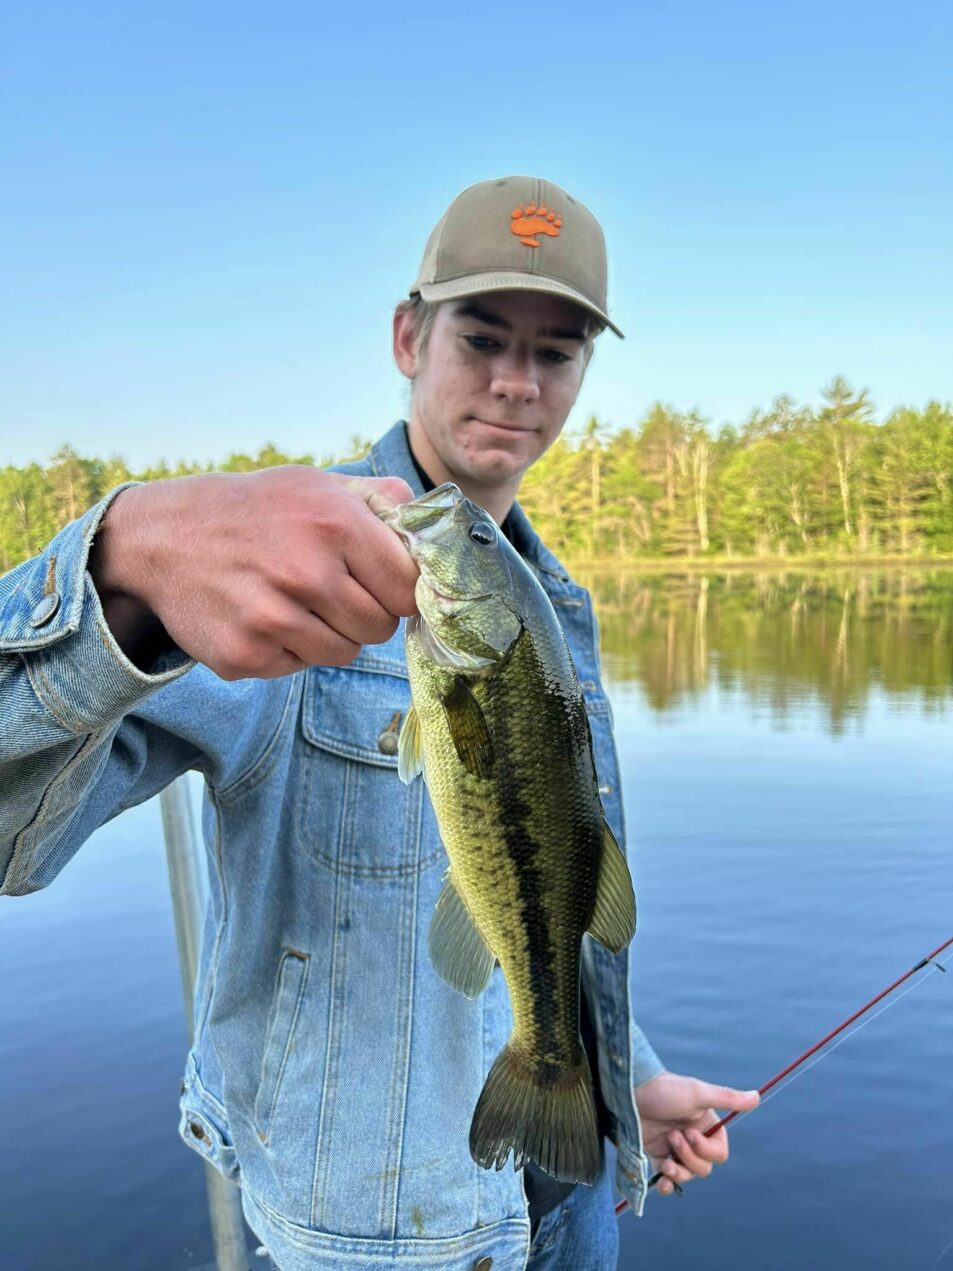 camper holding fish